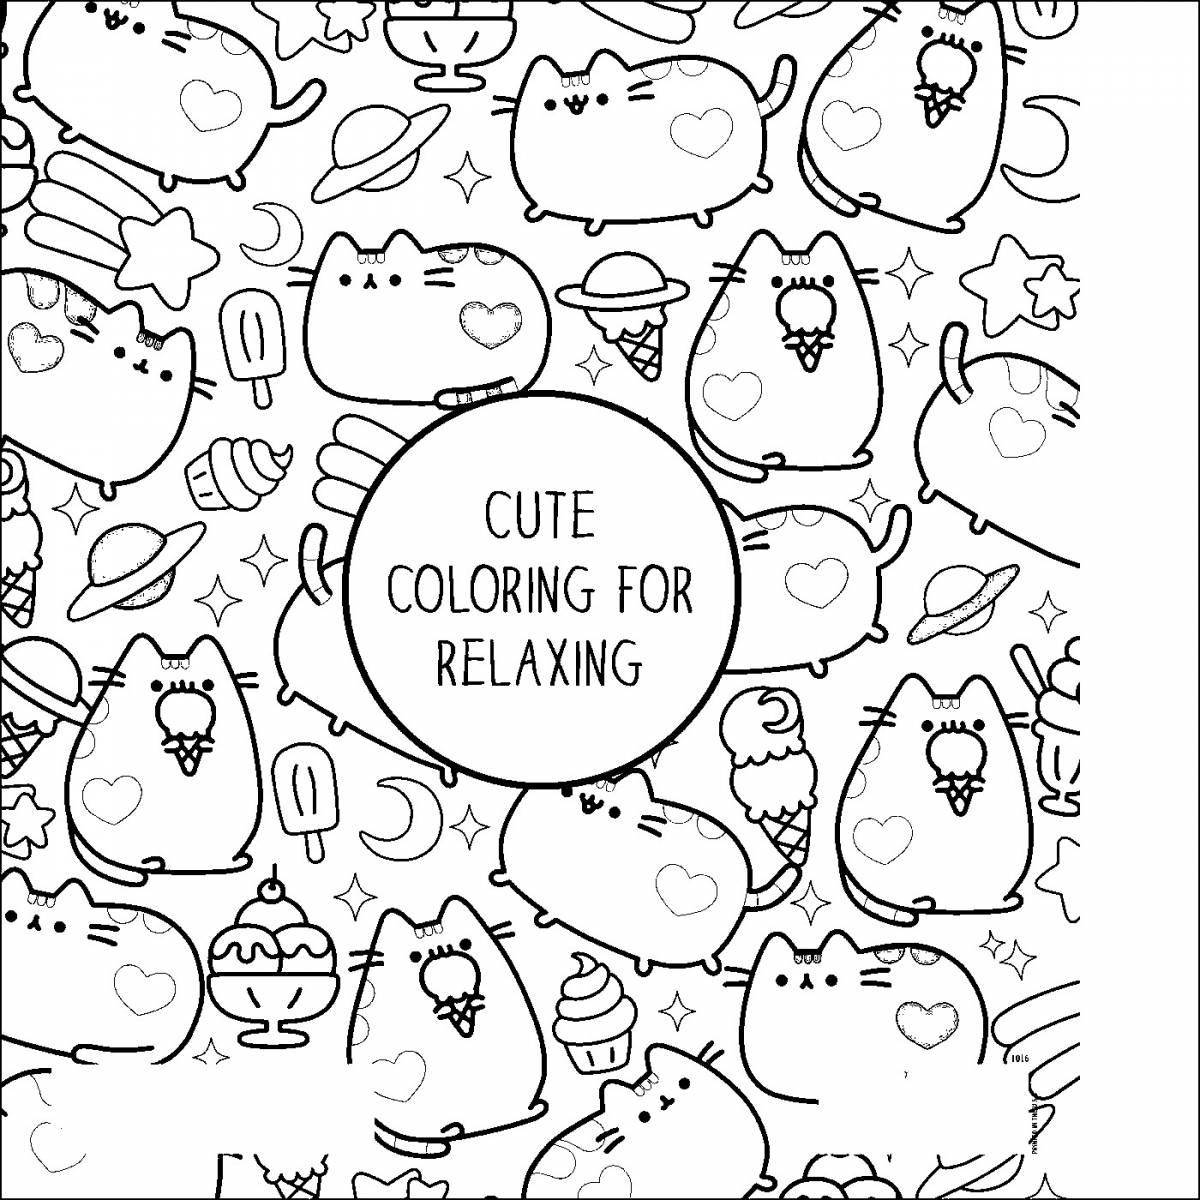 Amazing push plush coloring page